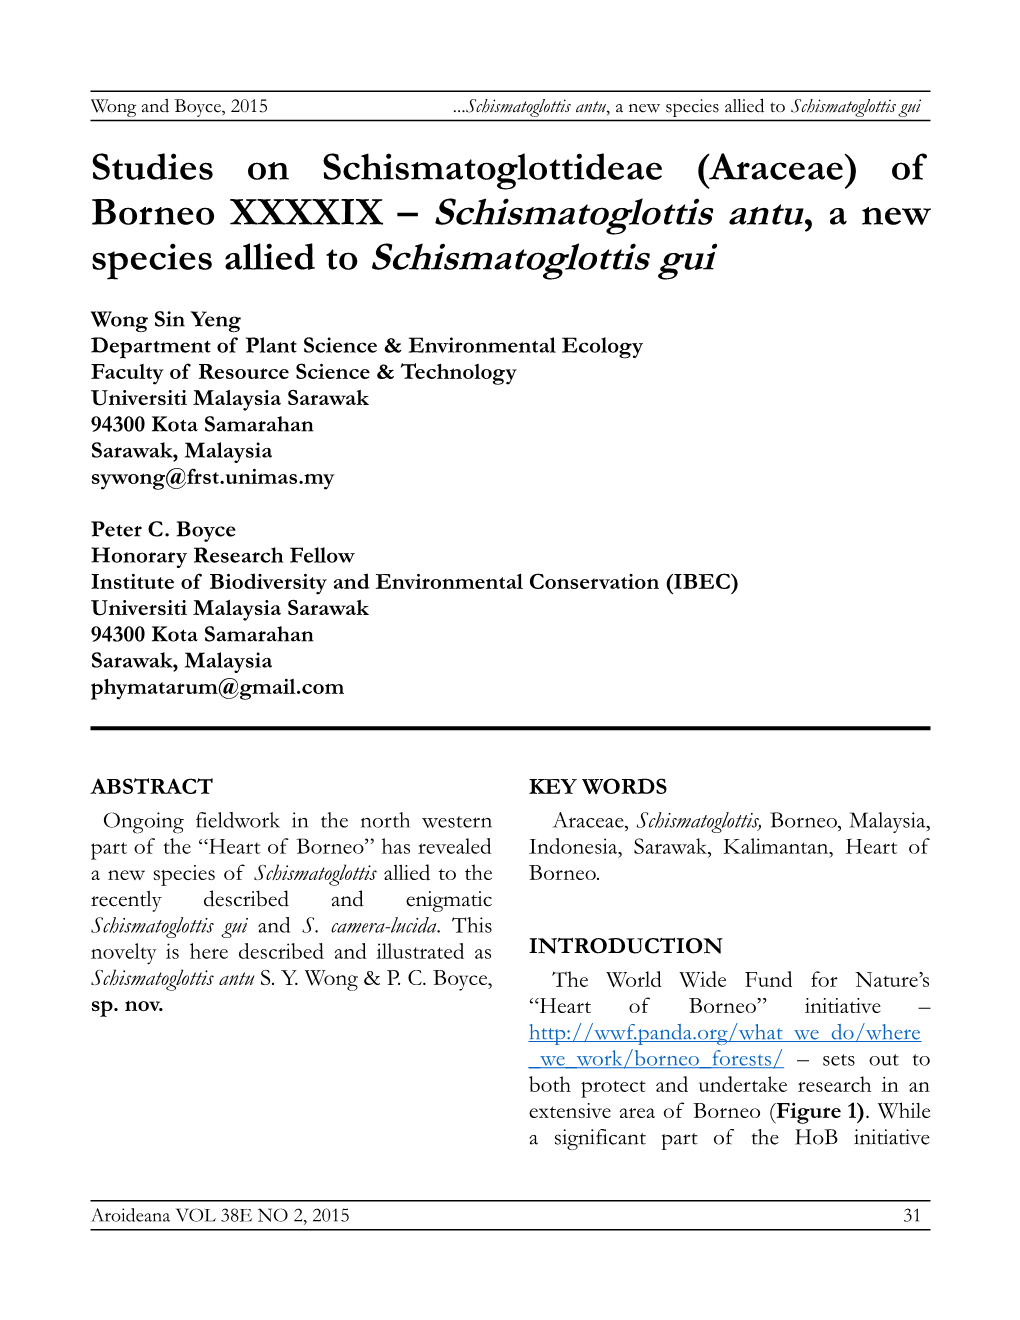 Borneo XXXXIX – Schismatoglottis Antu, a New Species Allied to Schismatoglottis Gui